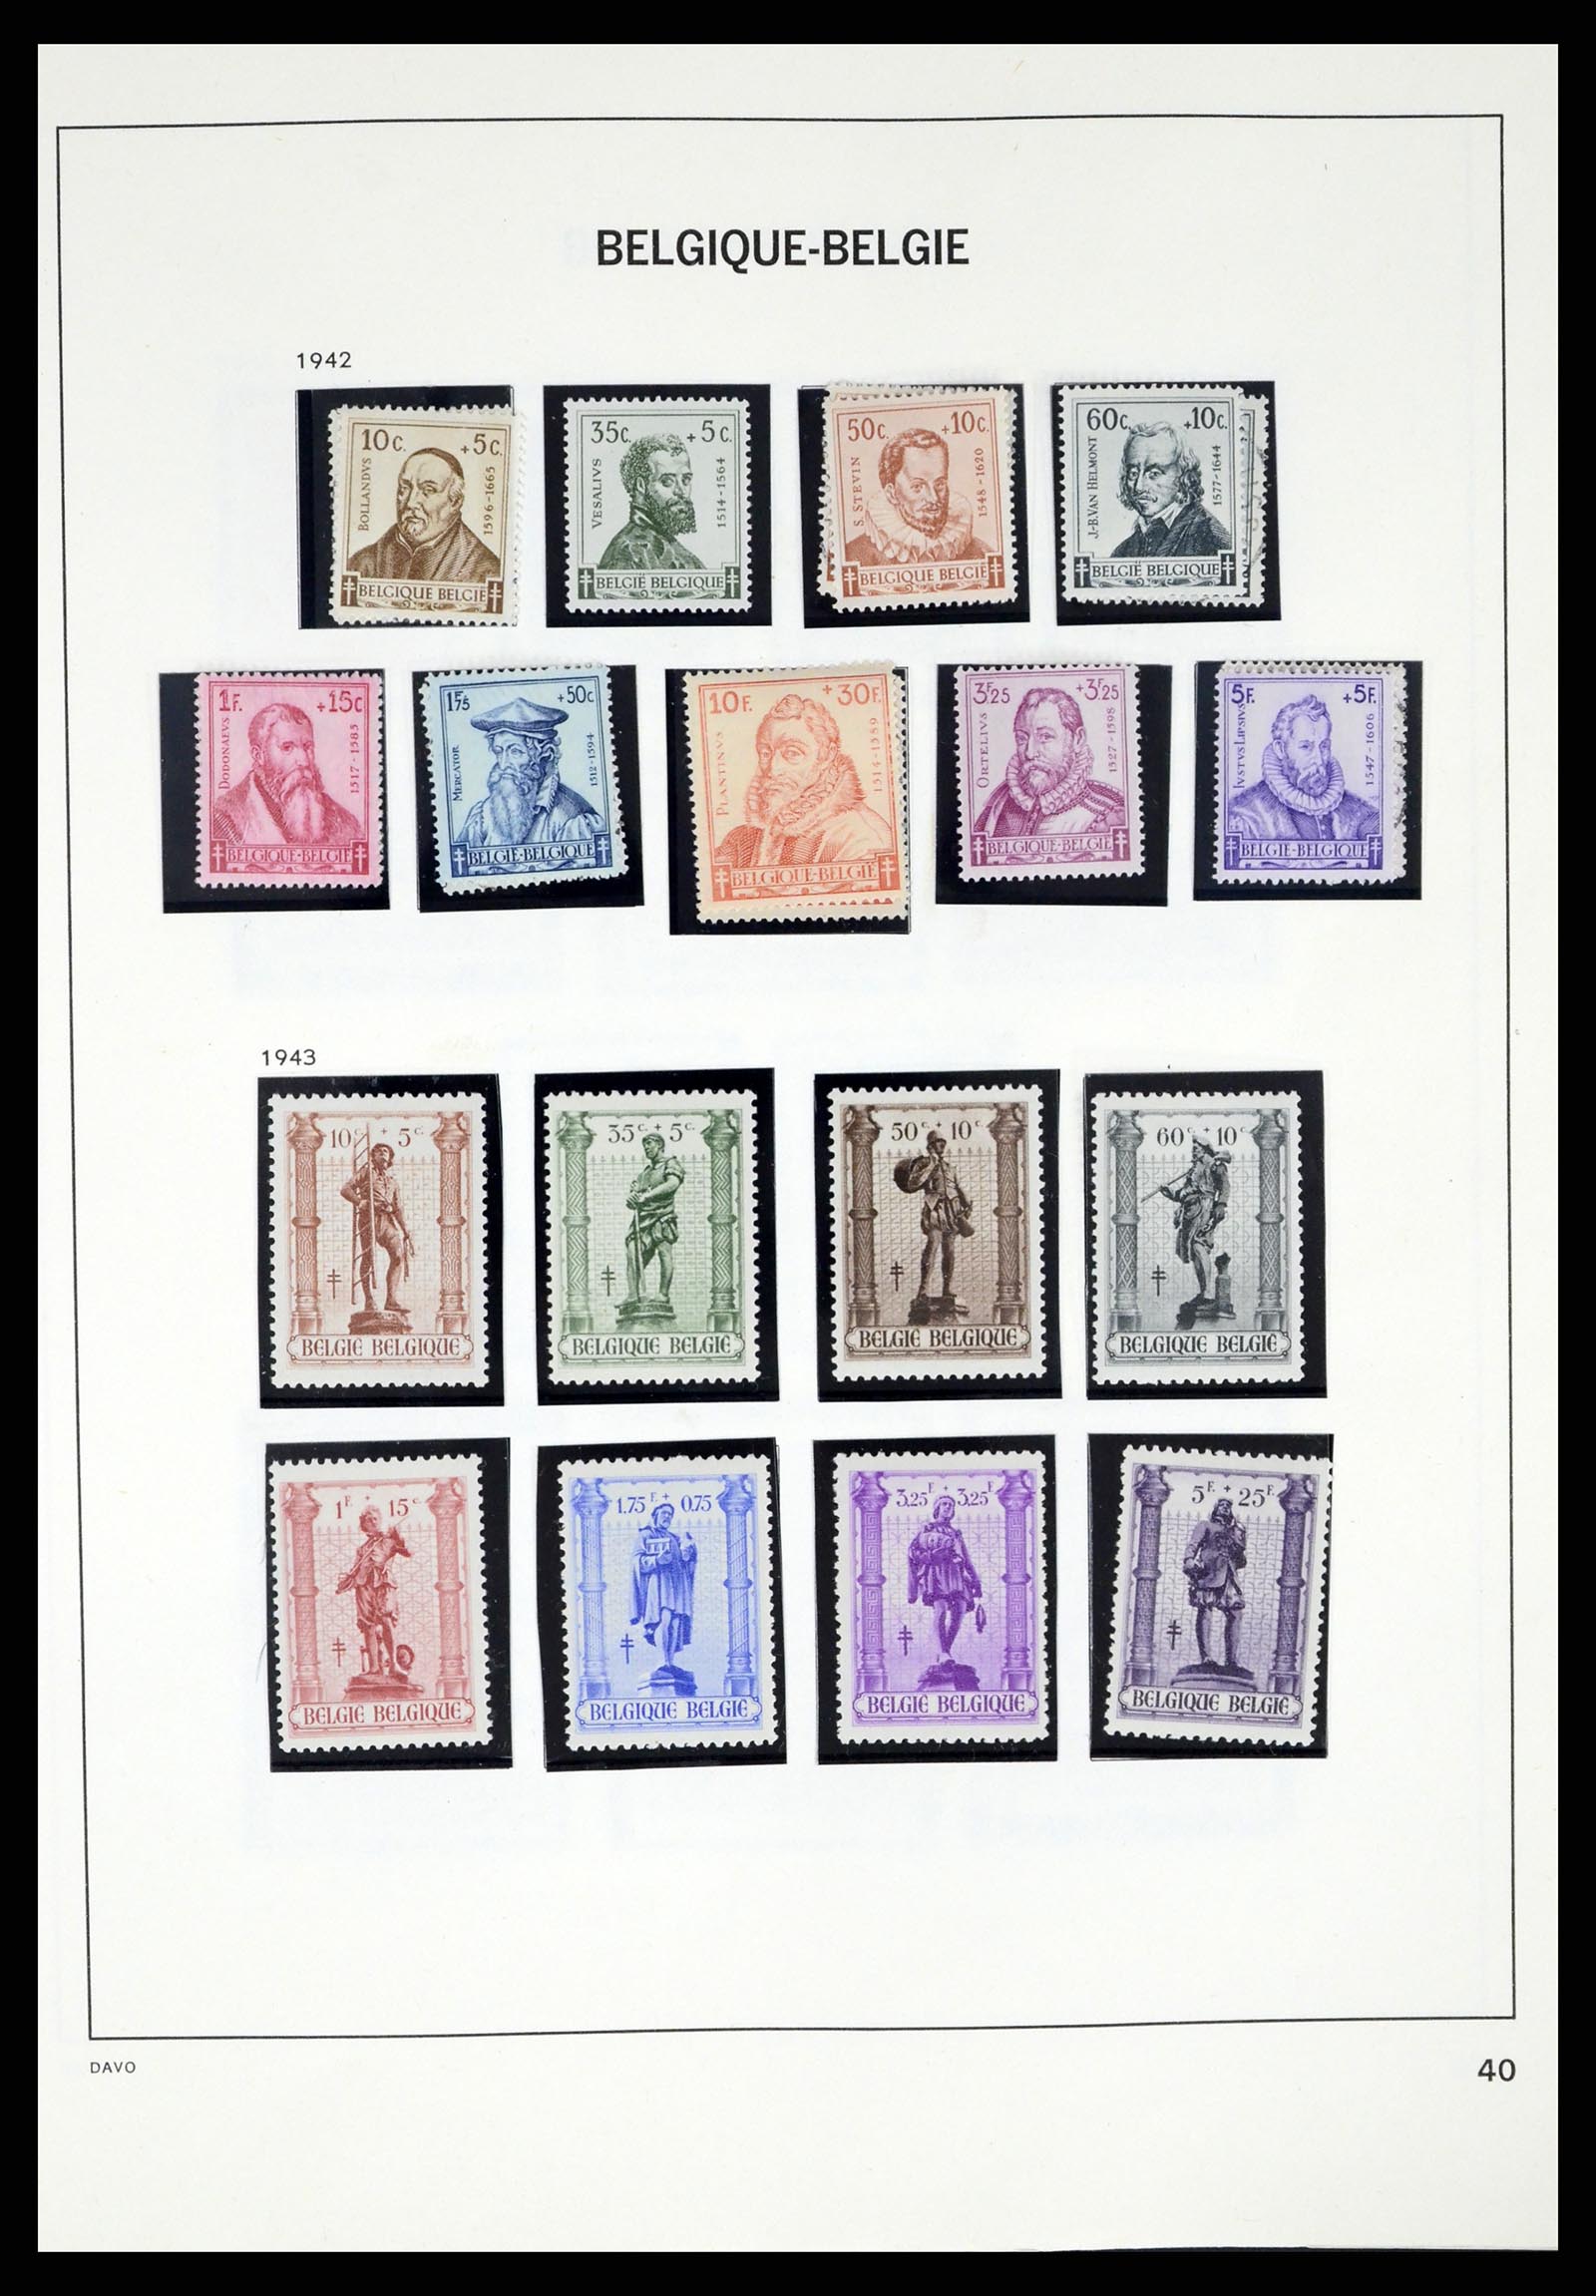 37367 038 - Stamp collection 37367 Belgium 1849-2003.